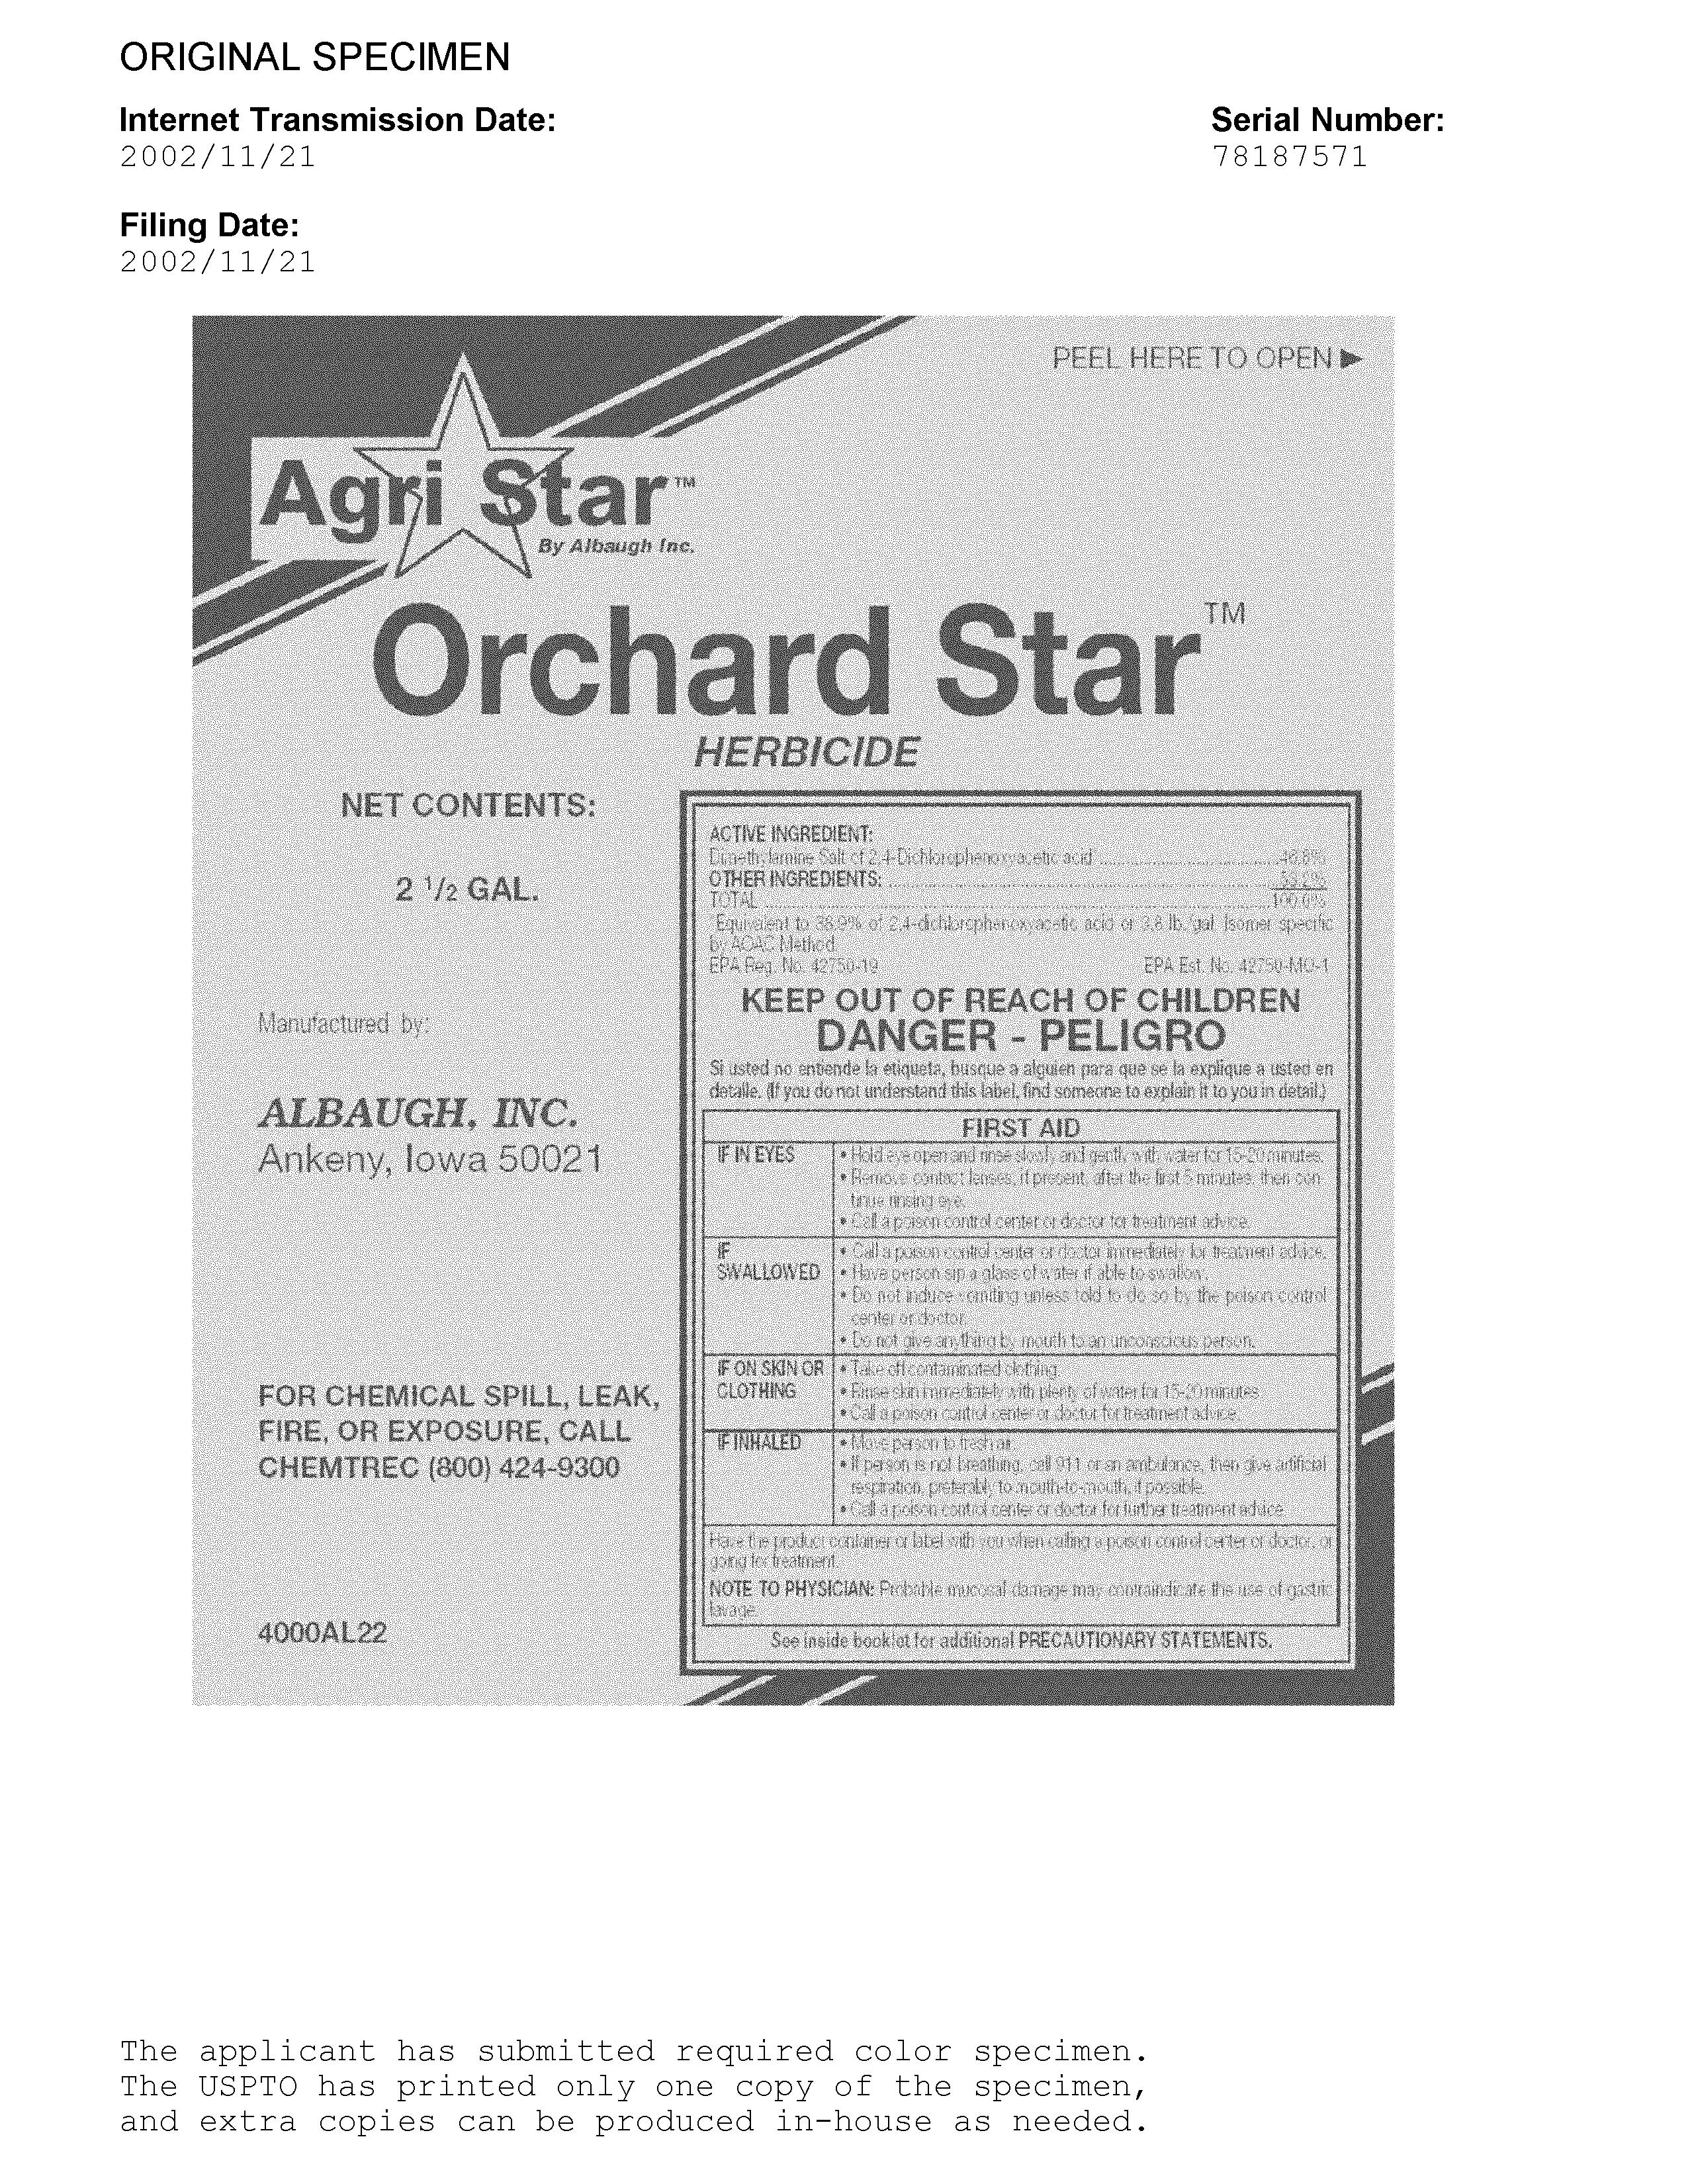  ORCHARD STAR